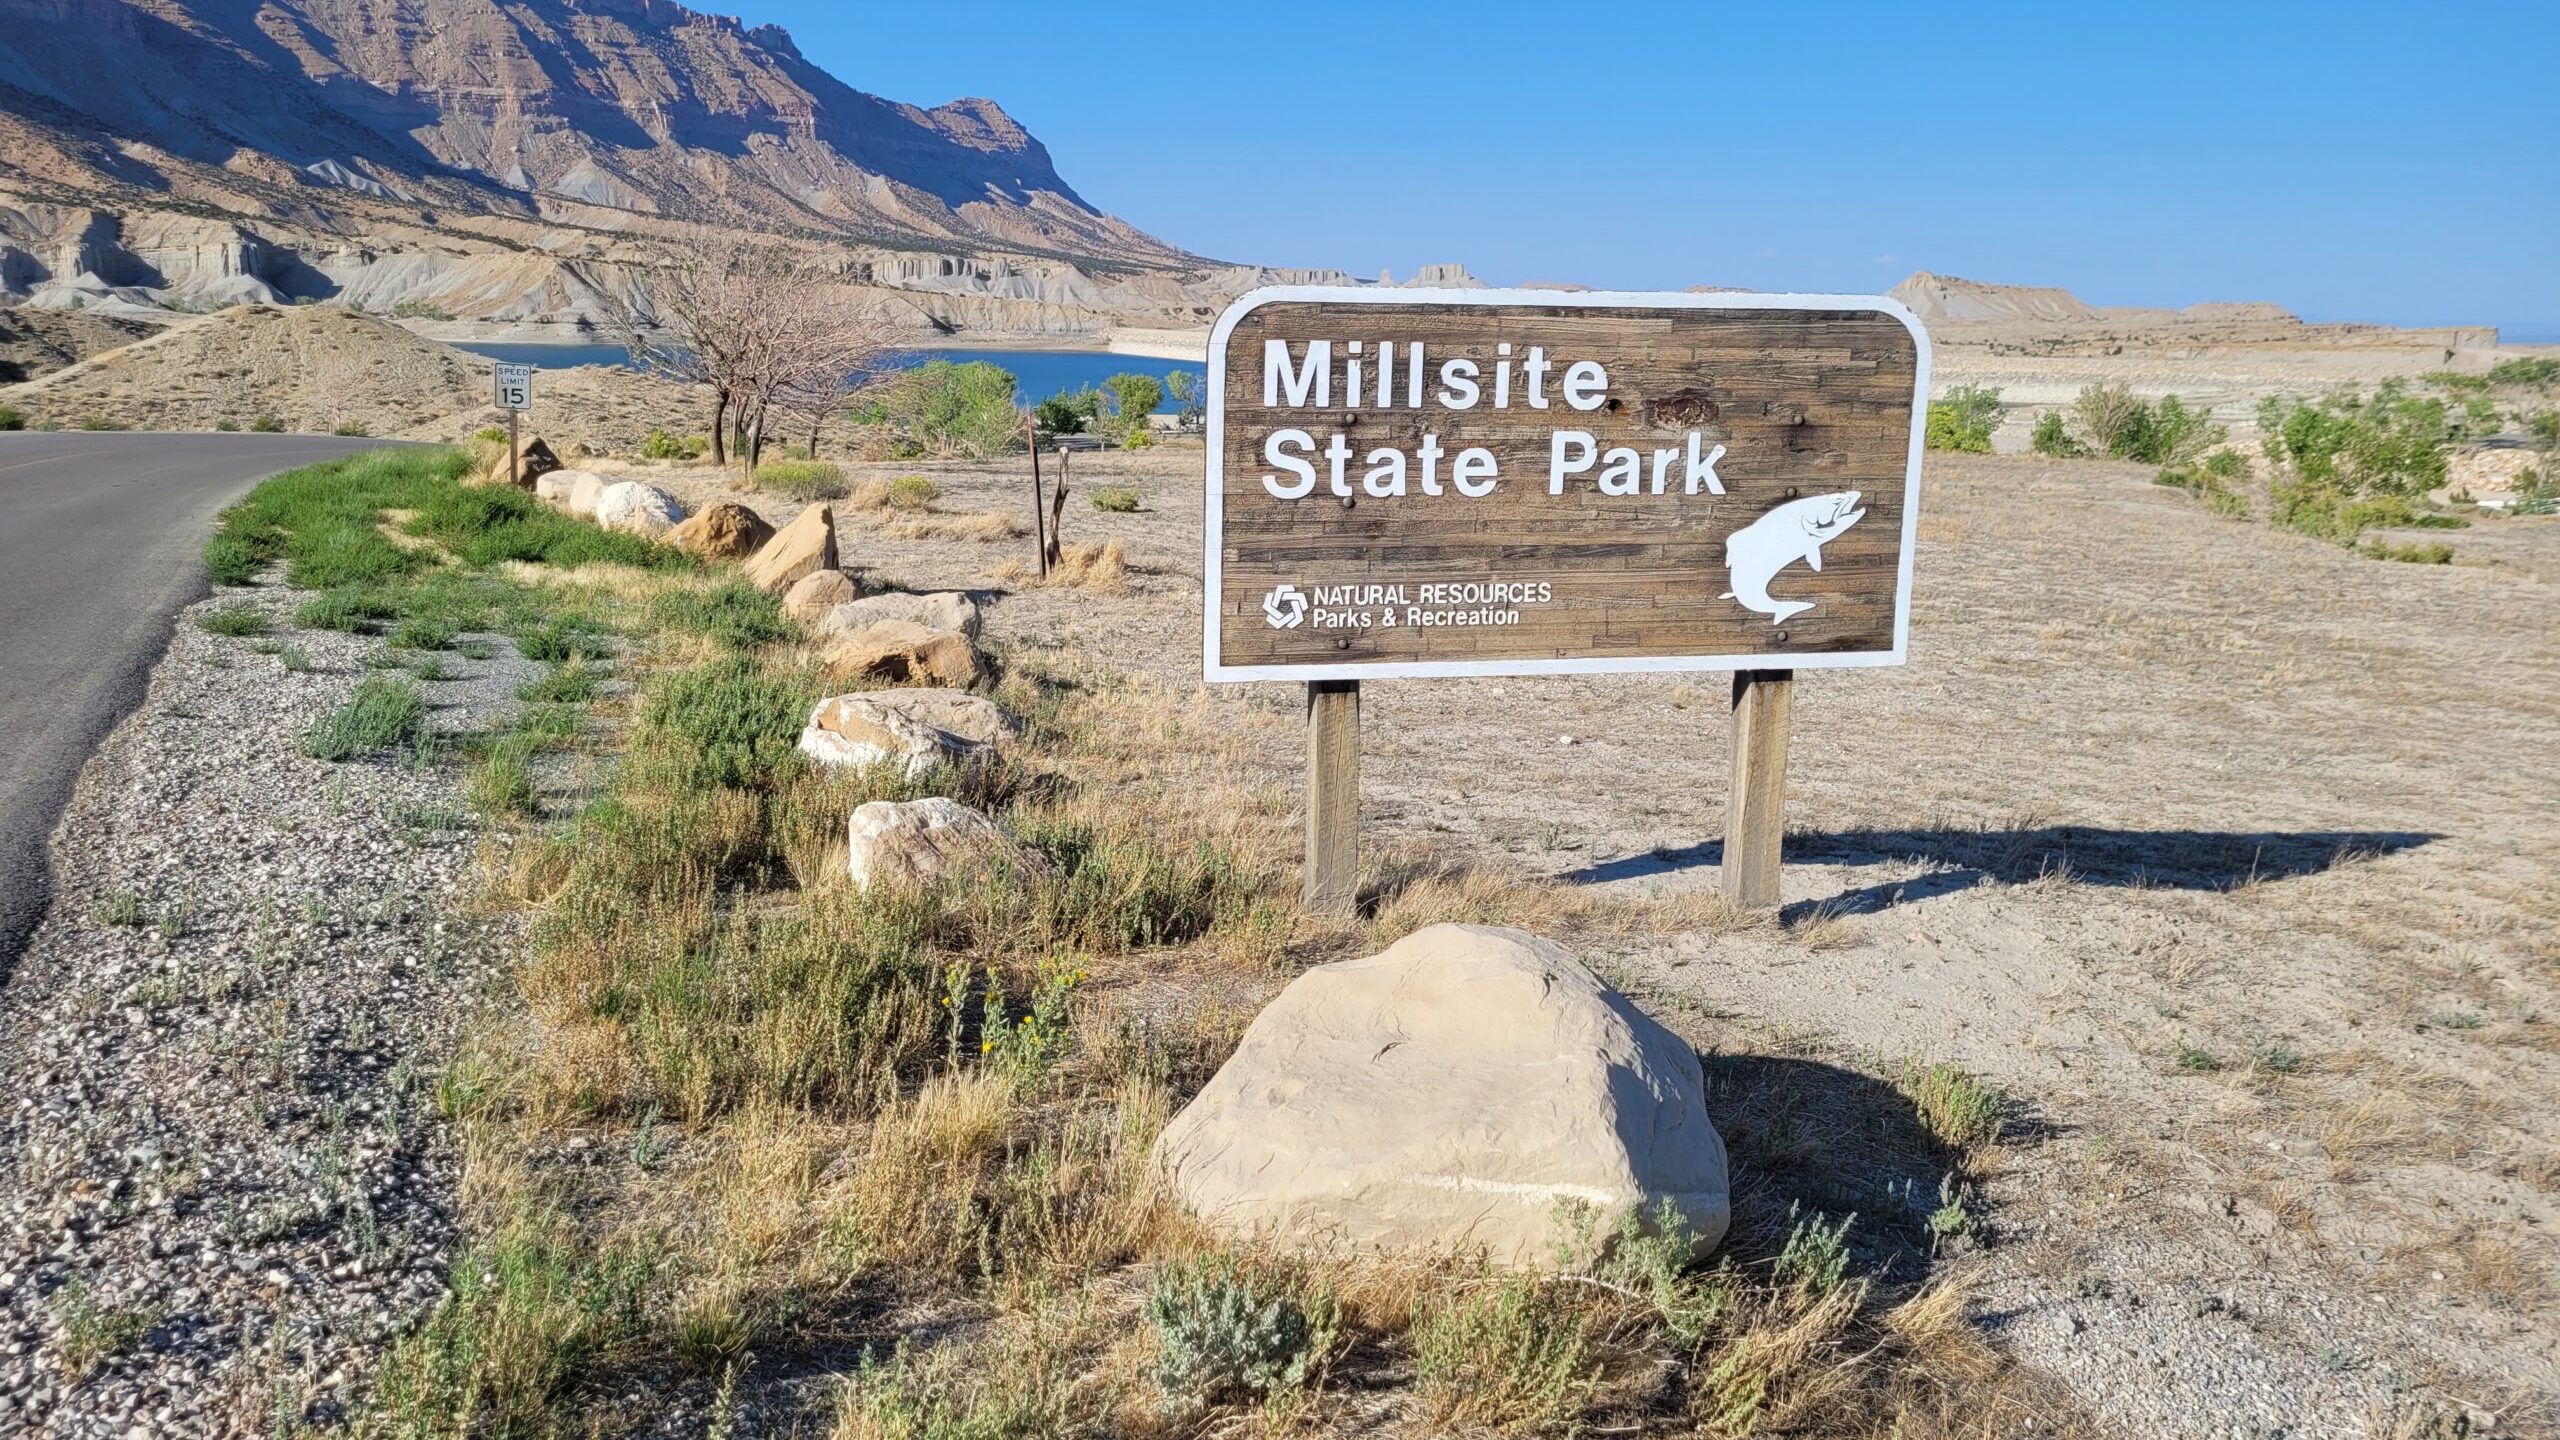 millsite state park sign shown, bucket biologists maybe threaten wildlife in the reservoir...